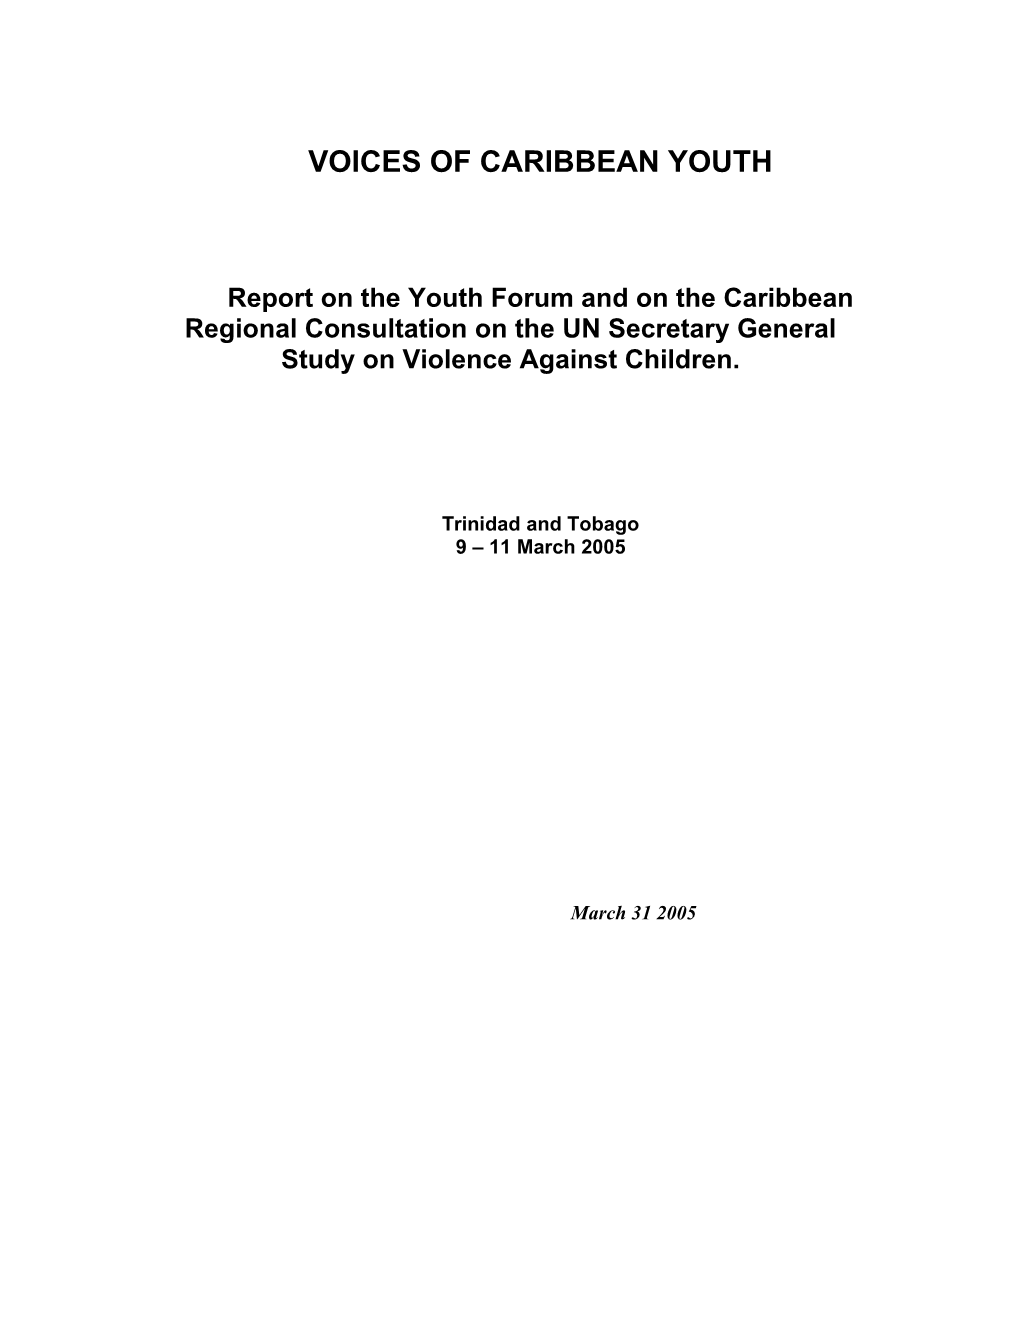 Report on the Caribbean Regional Consultation